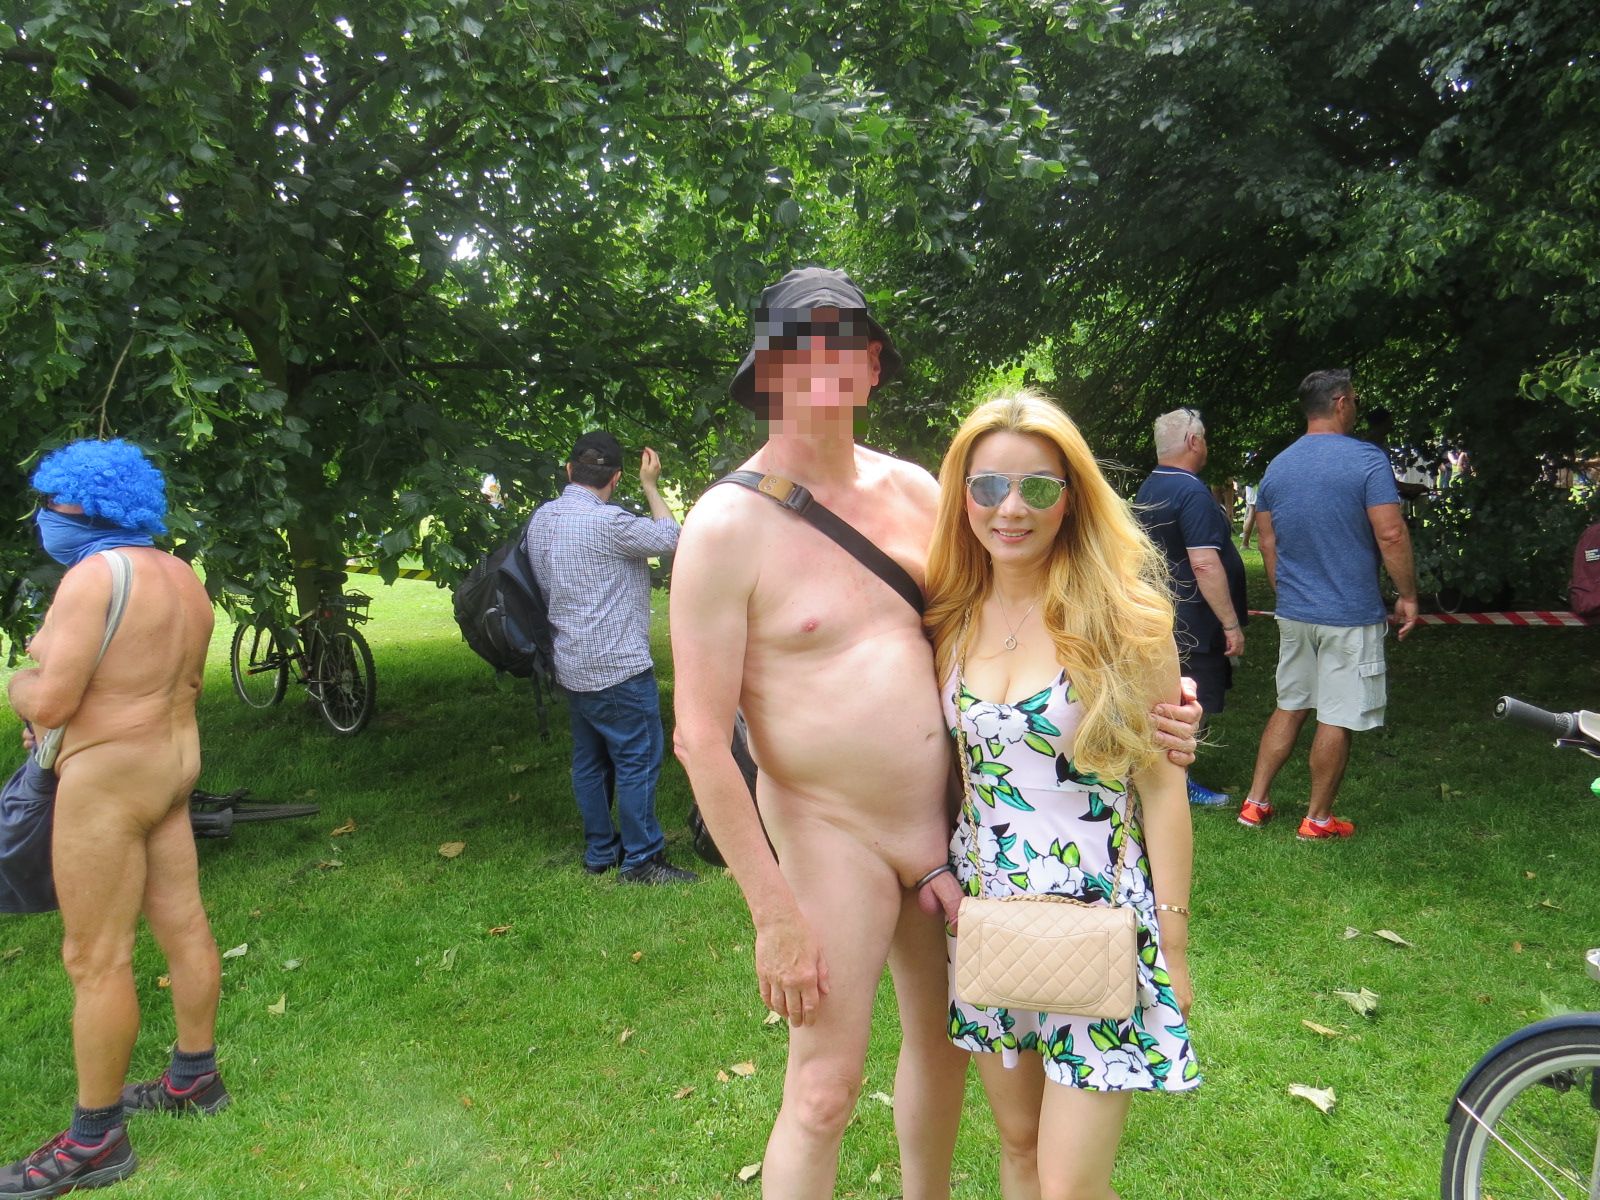 CFNM Star -Clothed female nude male femdom feminist blog 2020: CFNM scene.....